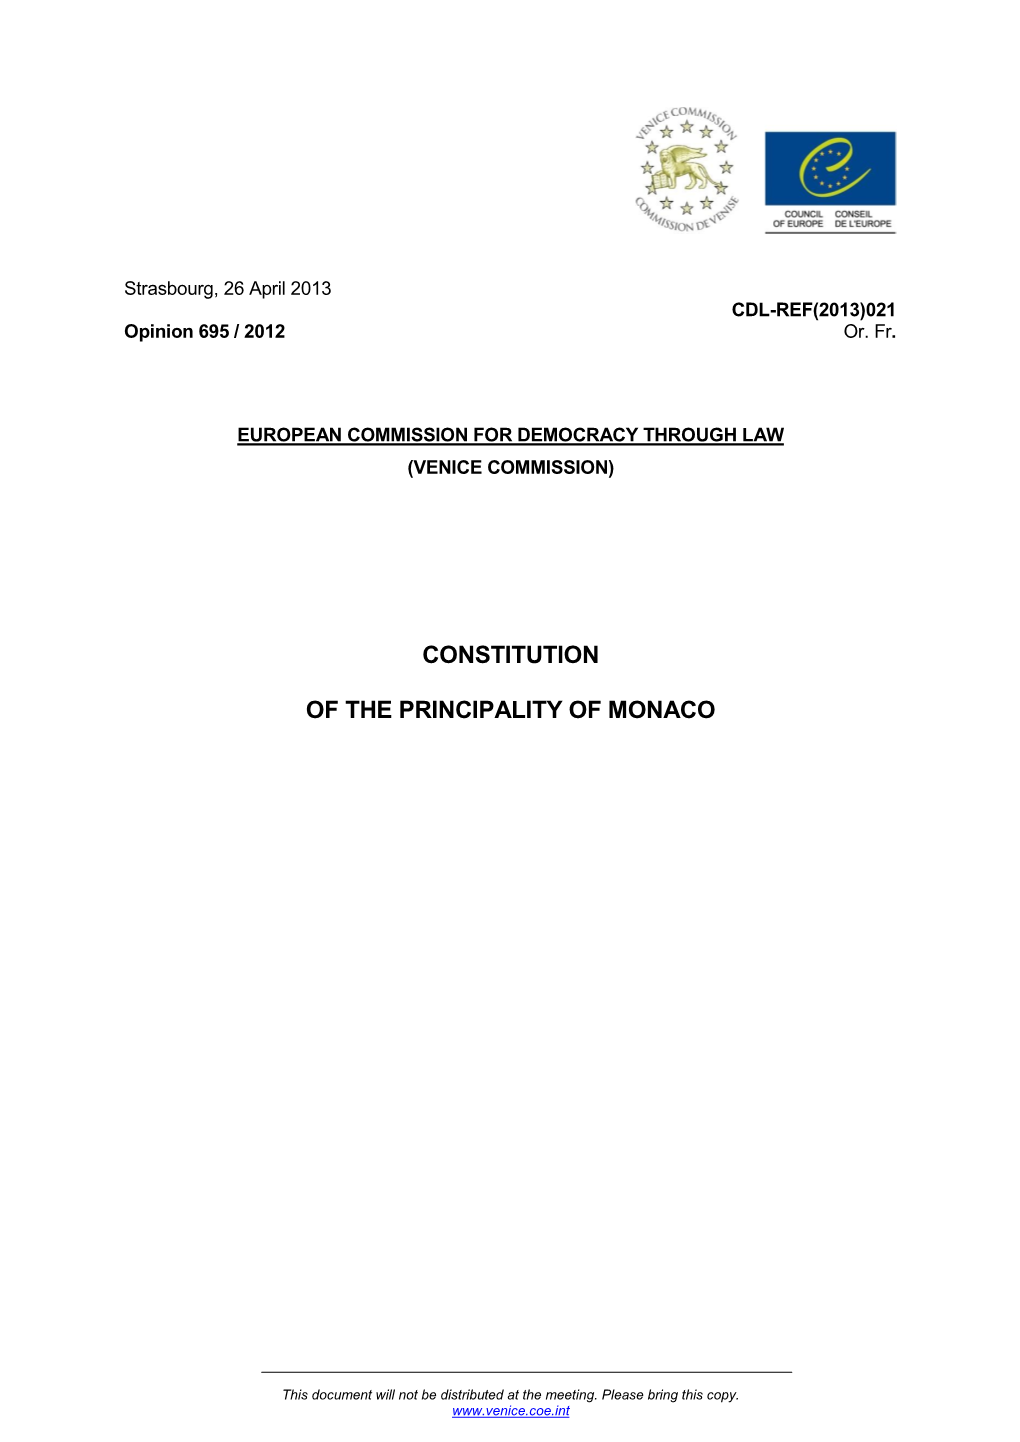 Constitution of the Principality of Monaco